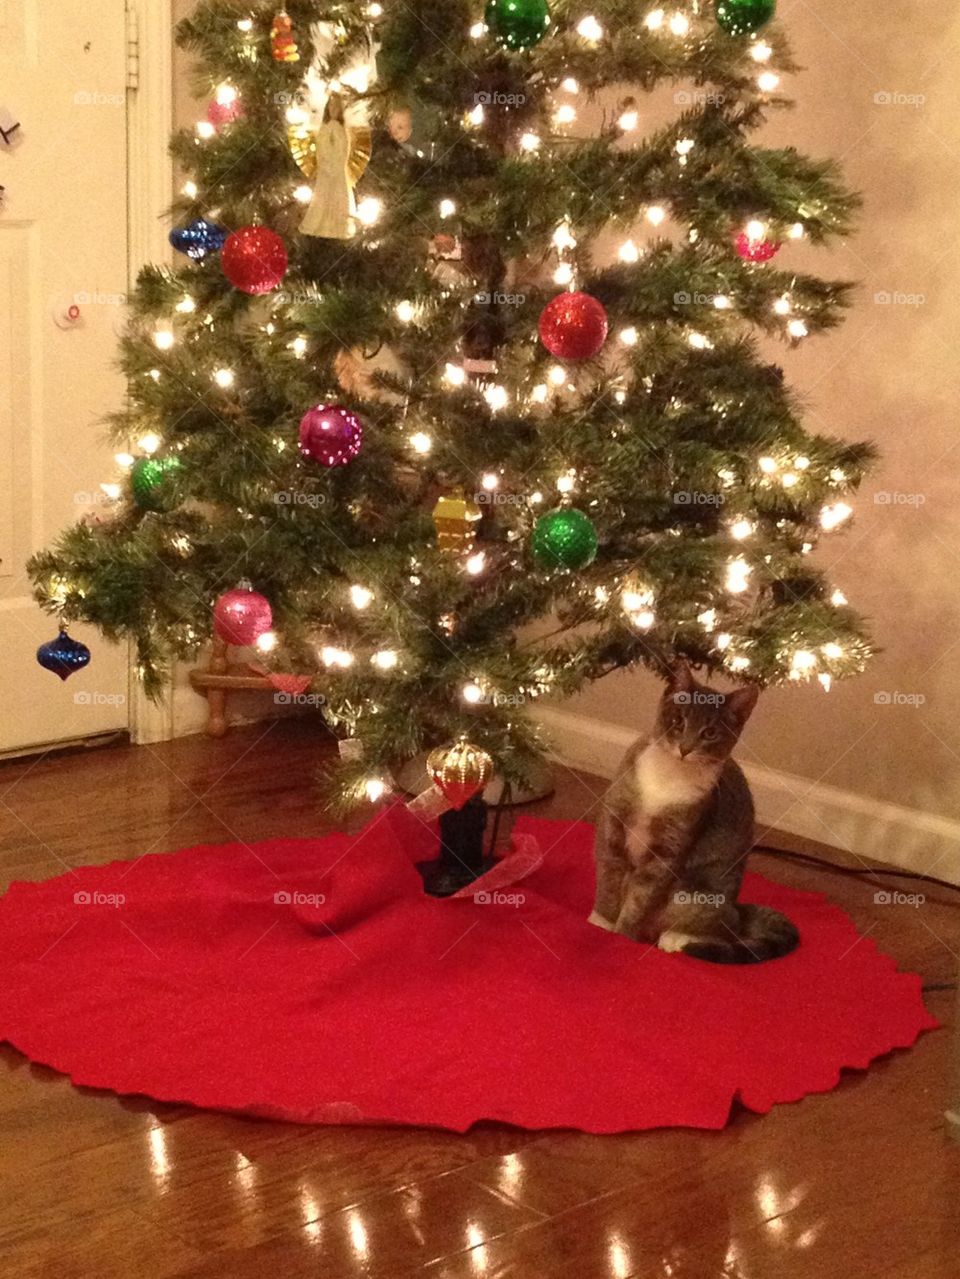 Kitty under the tree